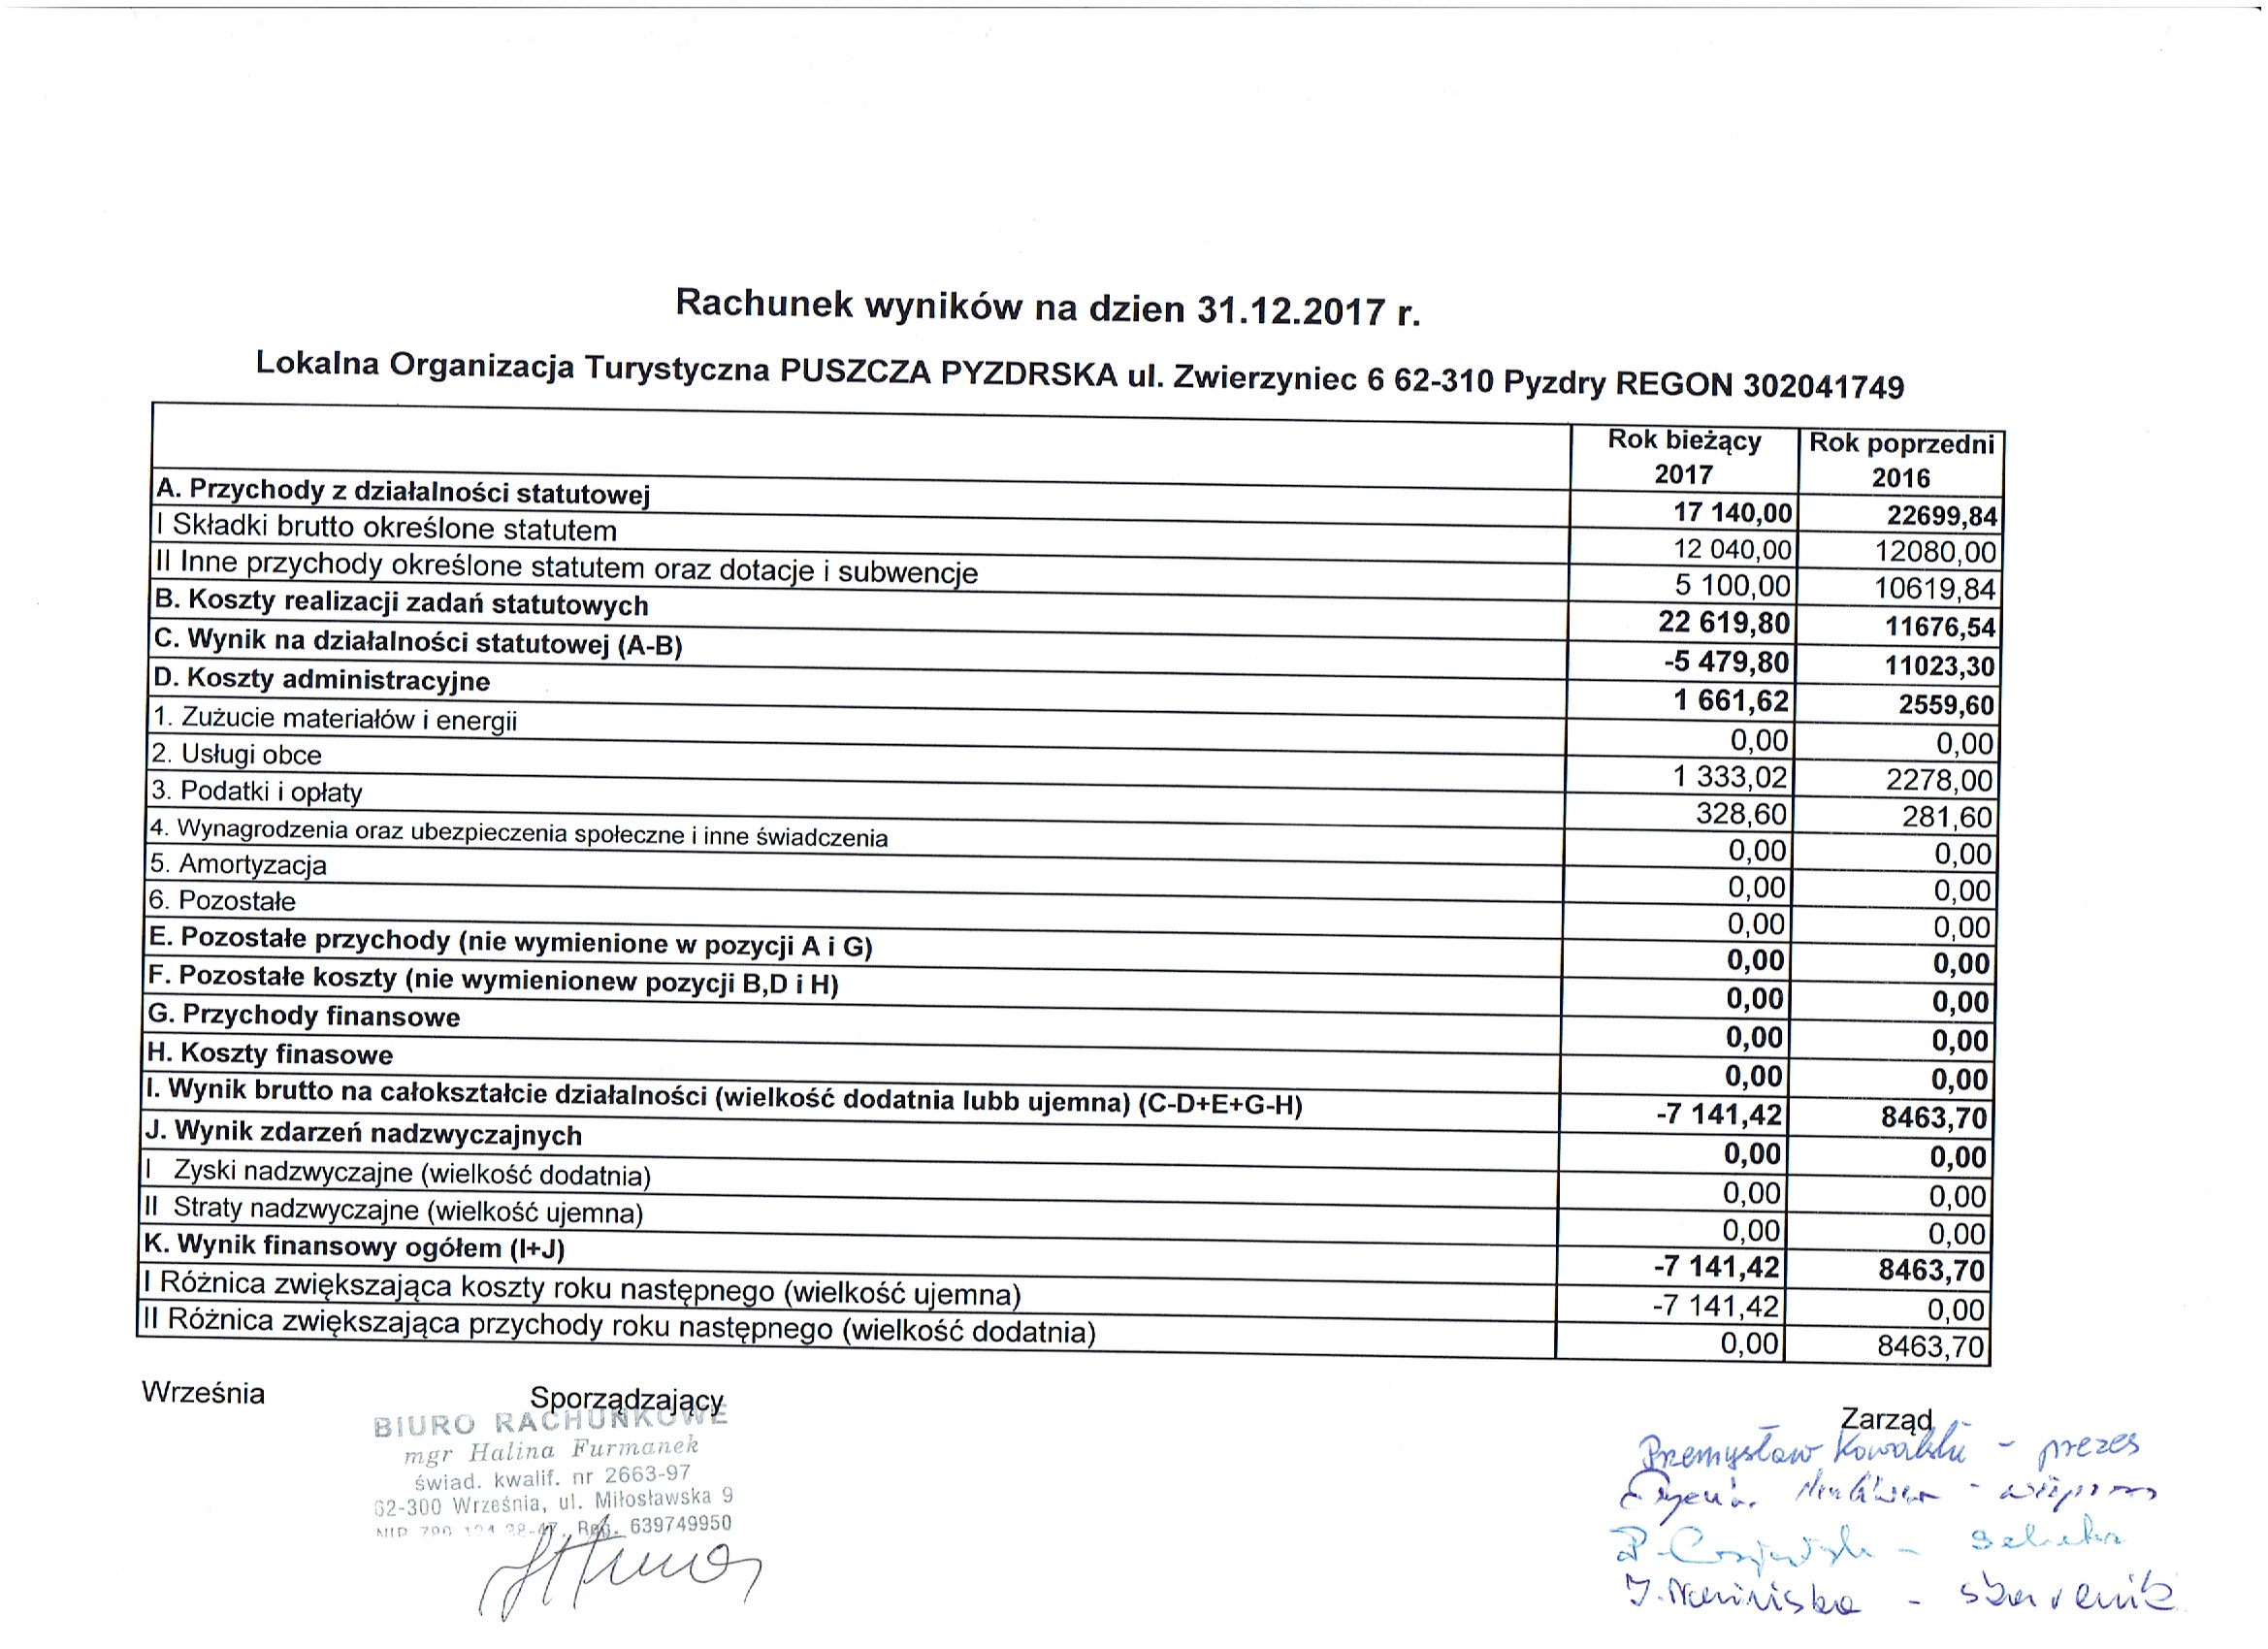 Rachunek wynik w LOT PP za 2016